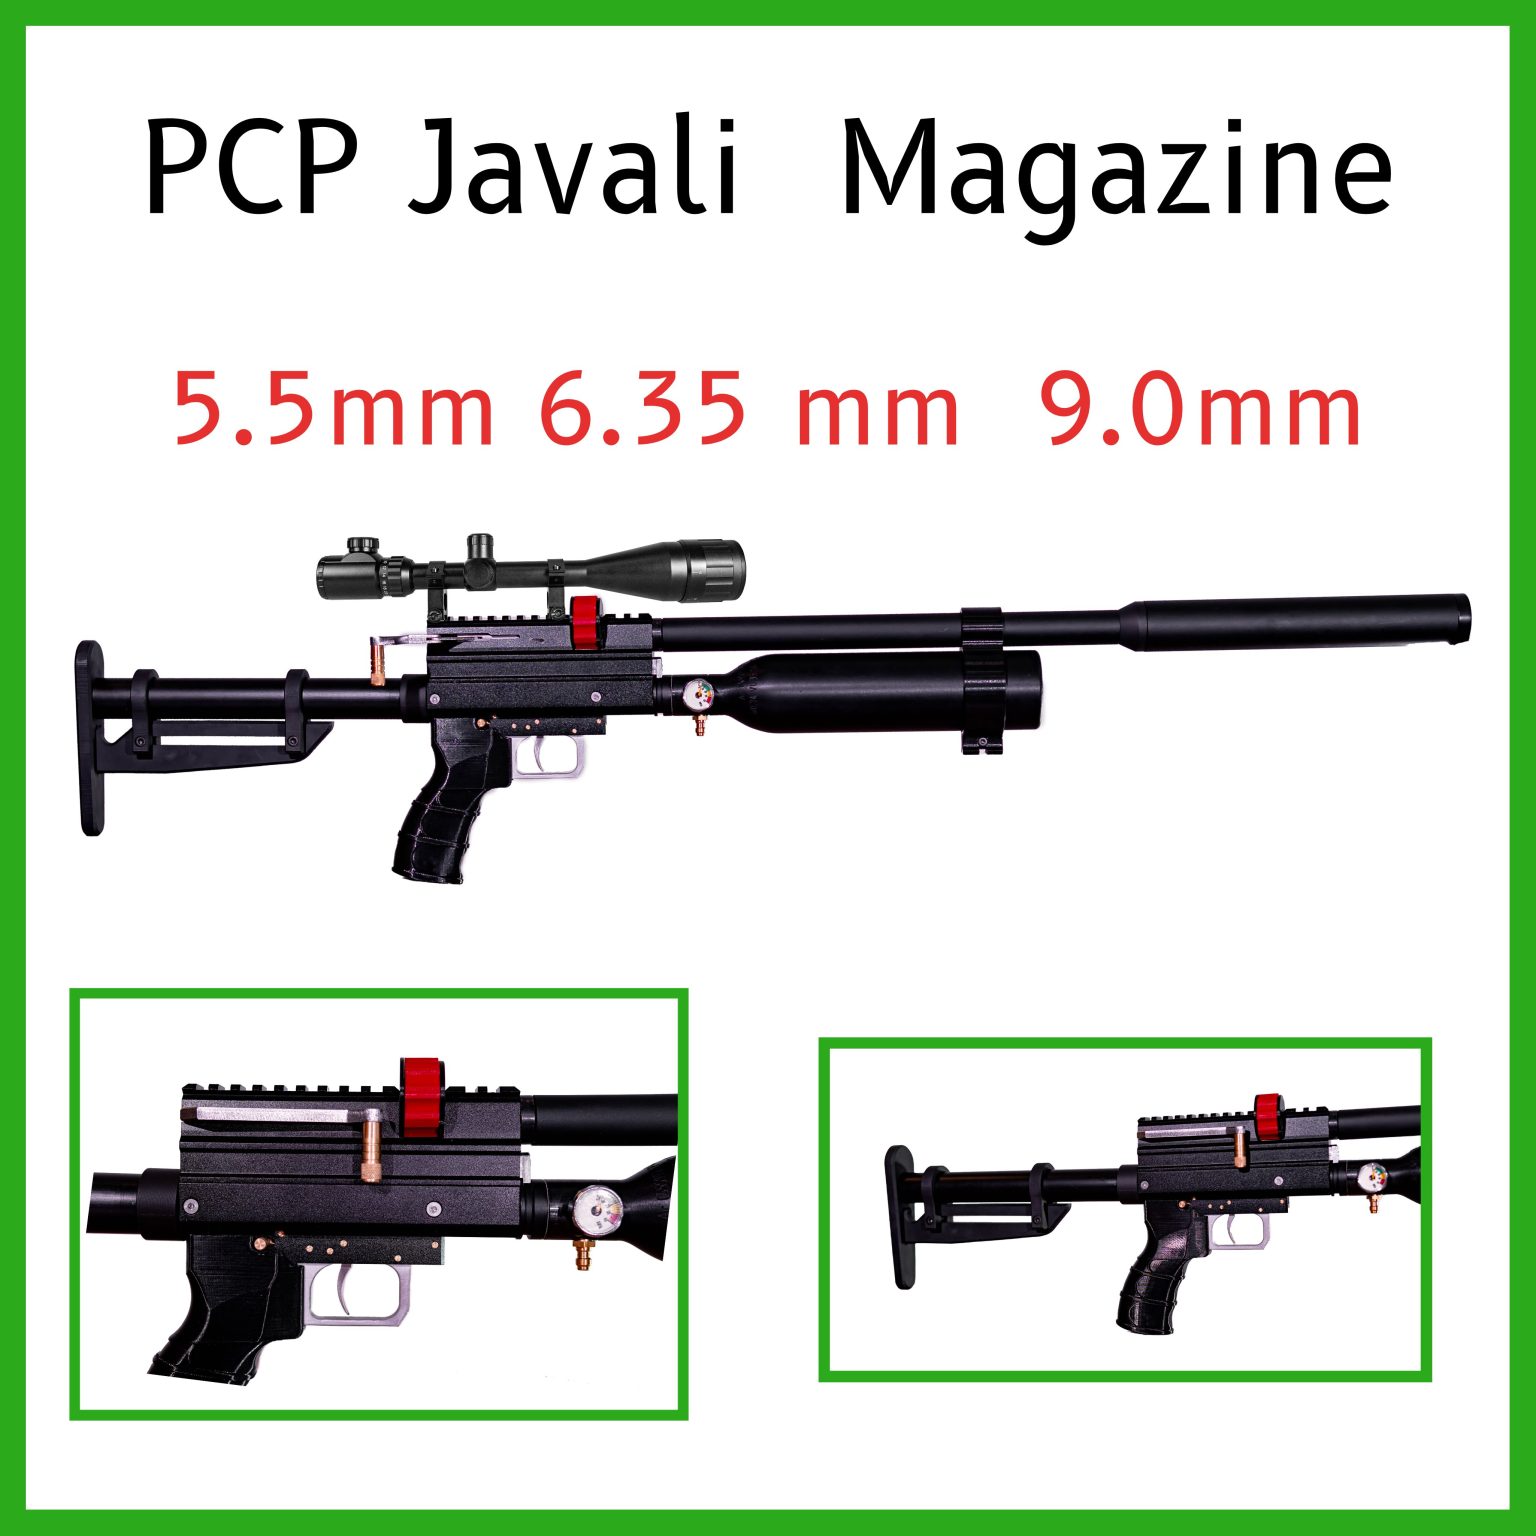 Carabina PCP Javali Com Magazine Mm Cano Cm Com Shock Pcp Javali